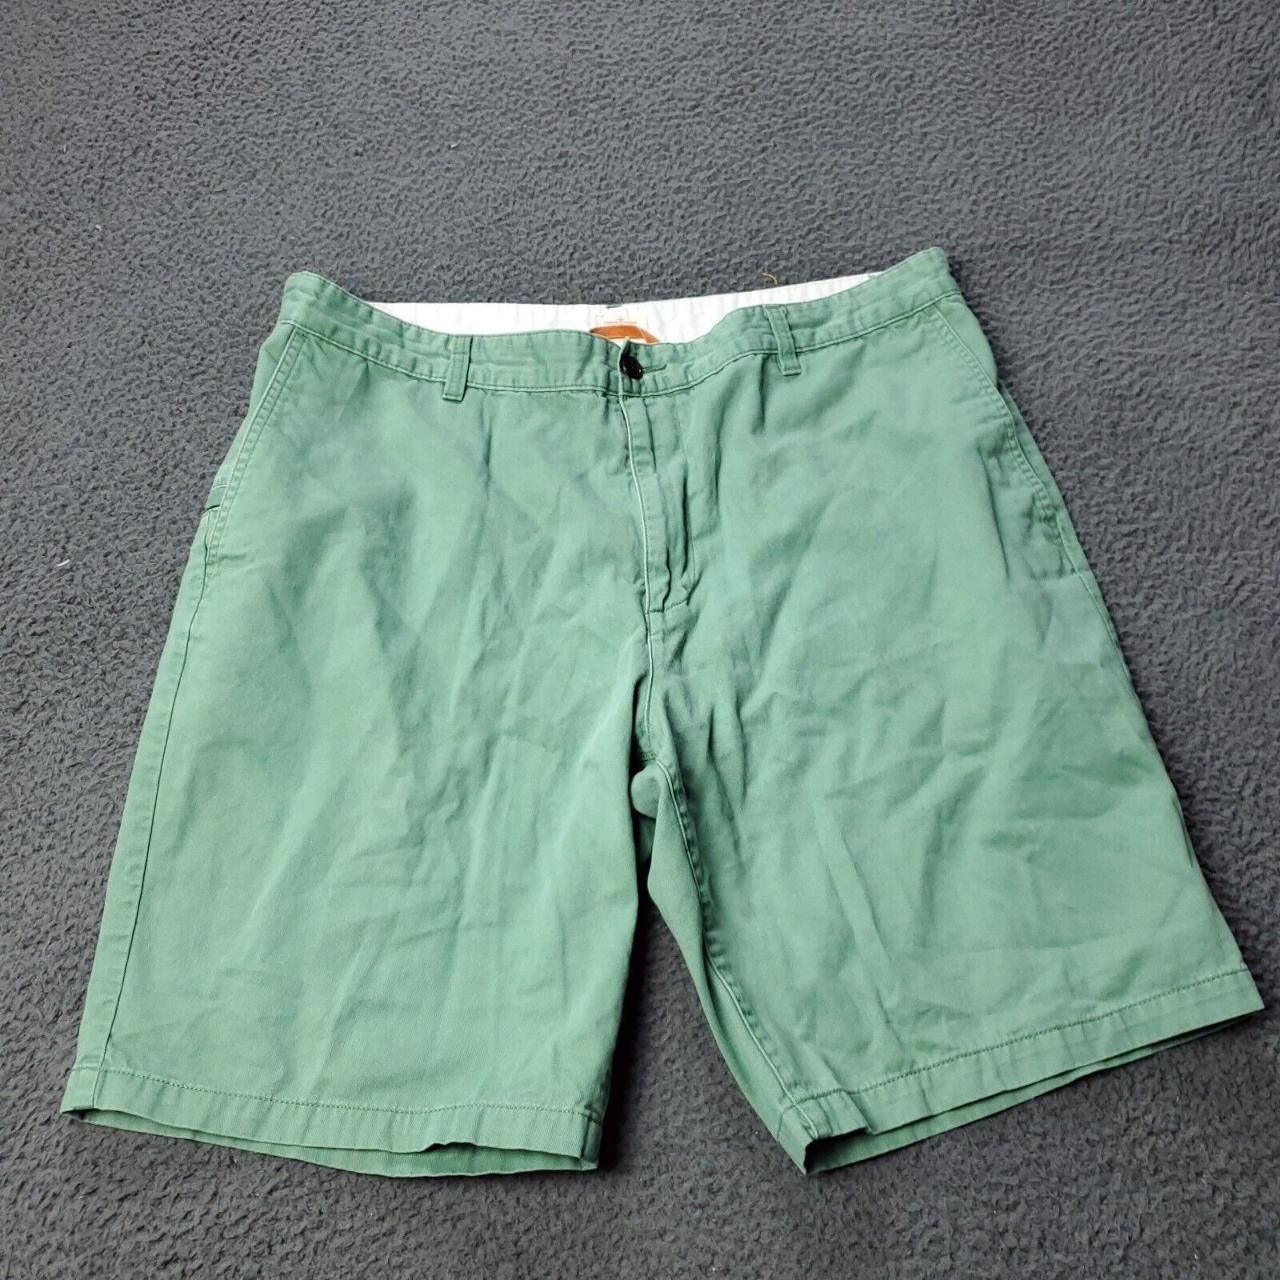 Dockers Men's Green Shorts